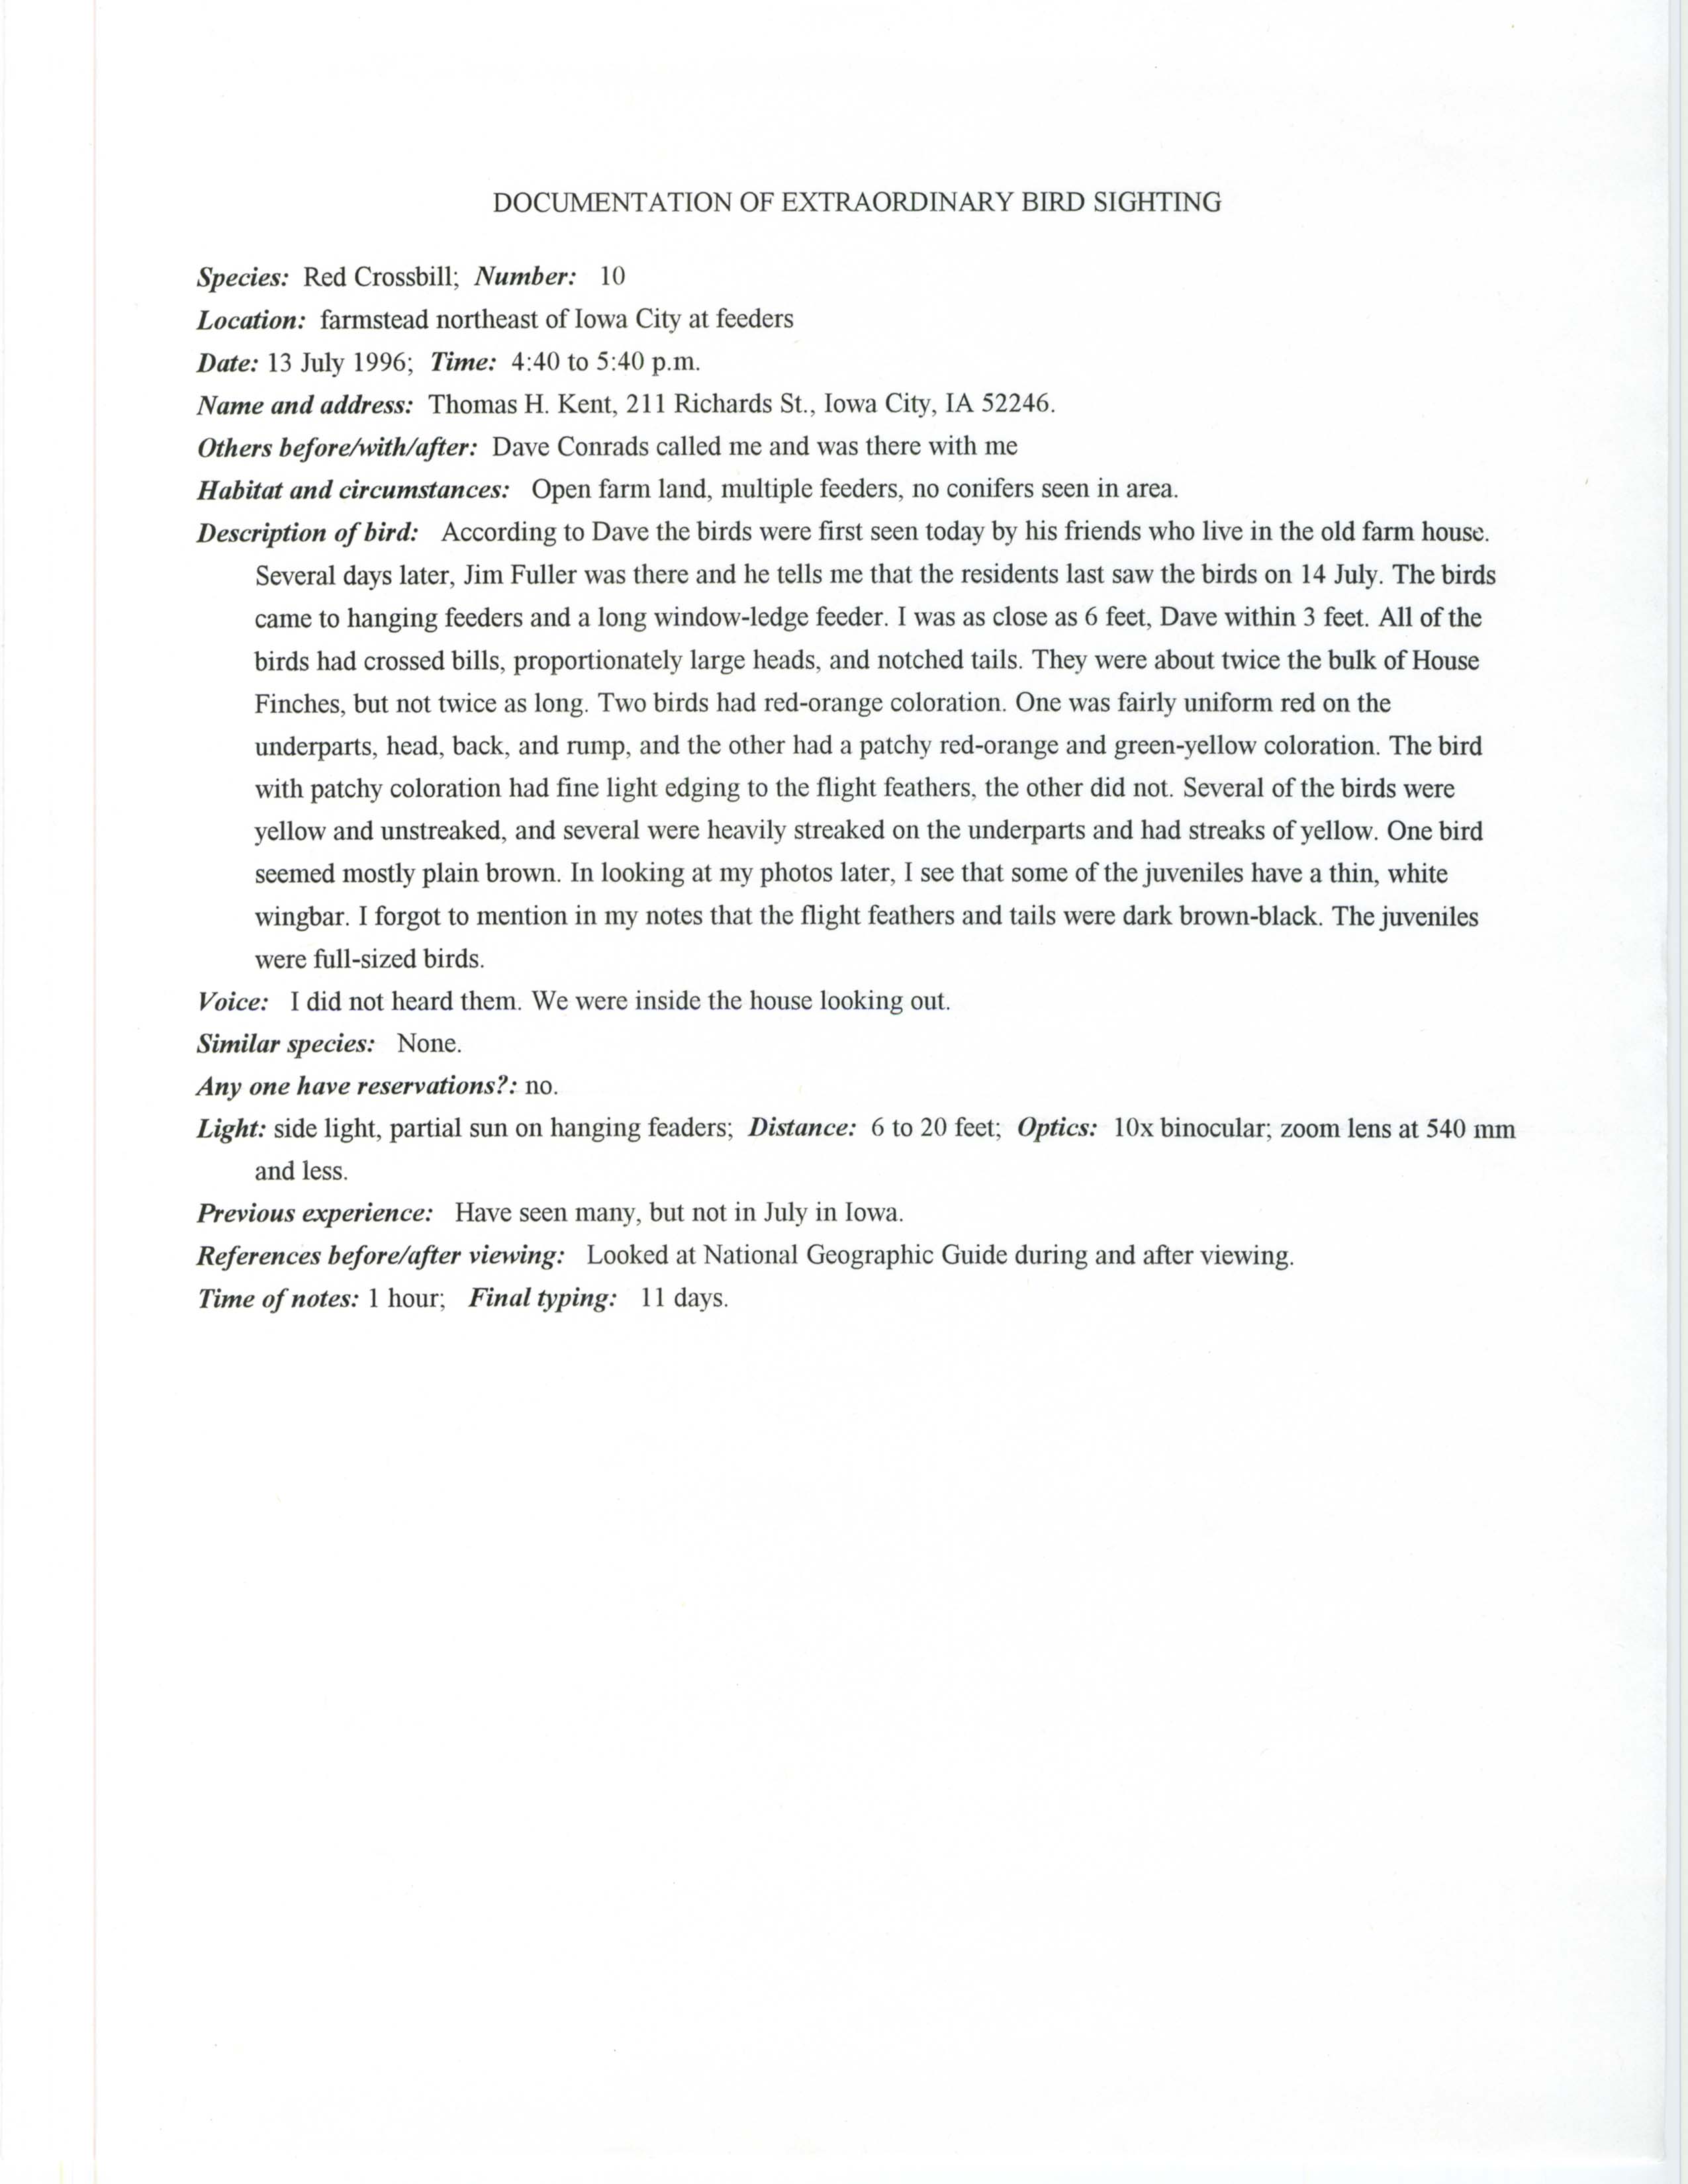 Rare bird documentation form for Red Crossbill northeast of Iowa City, 1996